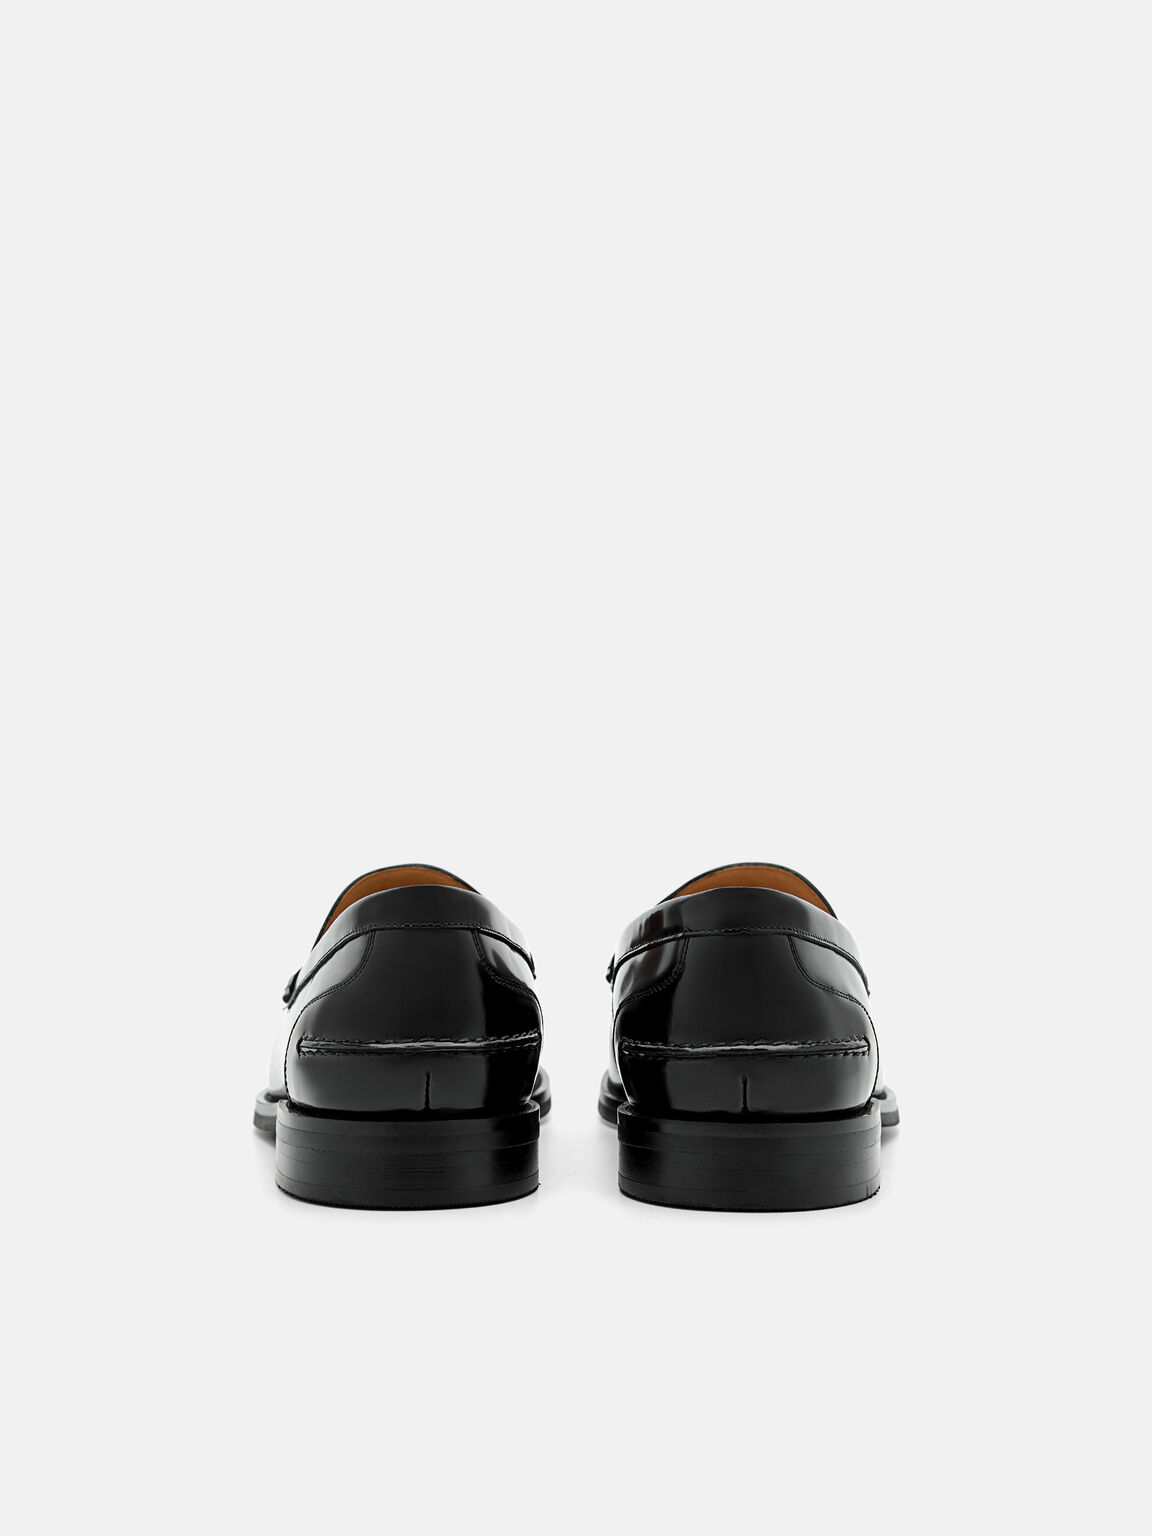 Robert Leather Horsebit Loafers, Black, hi-res